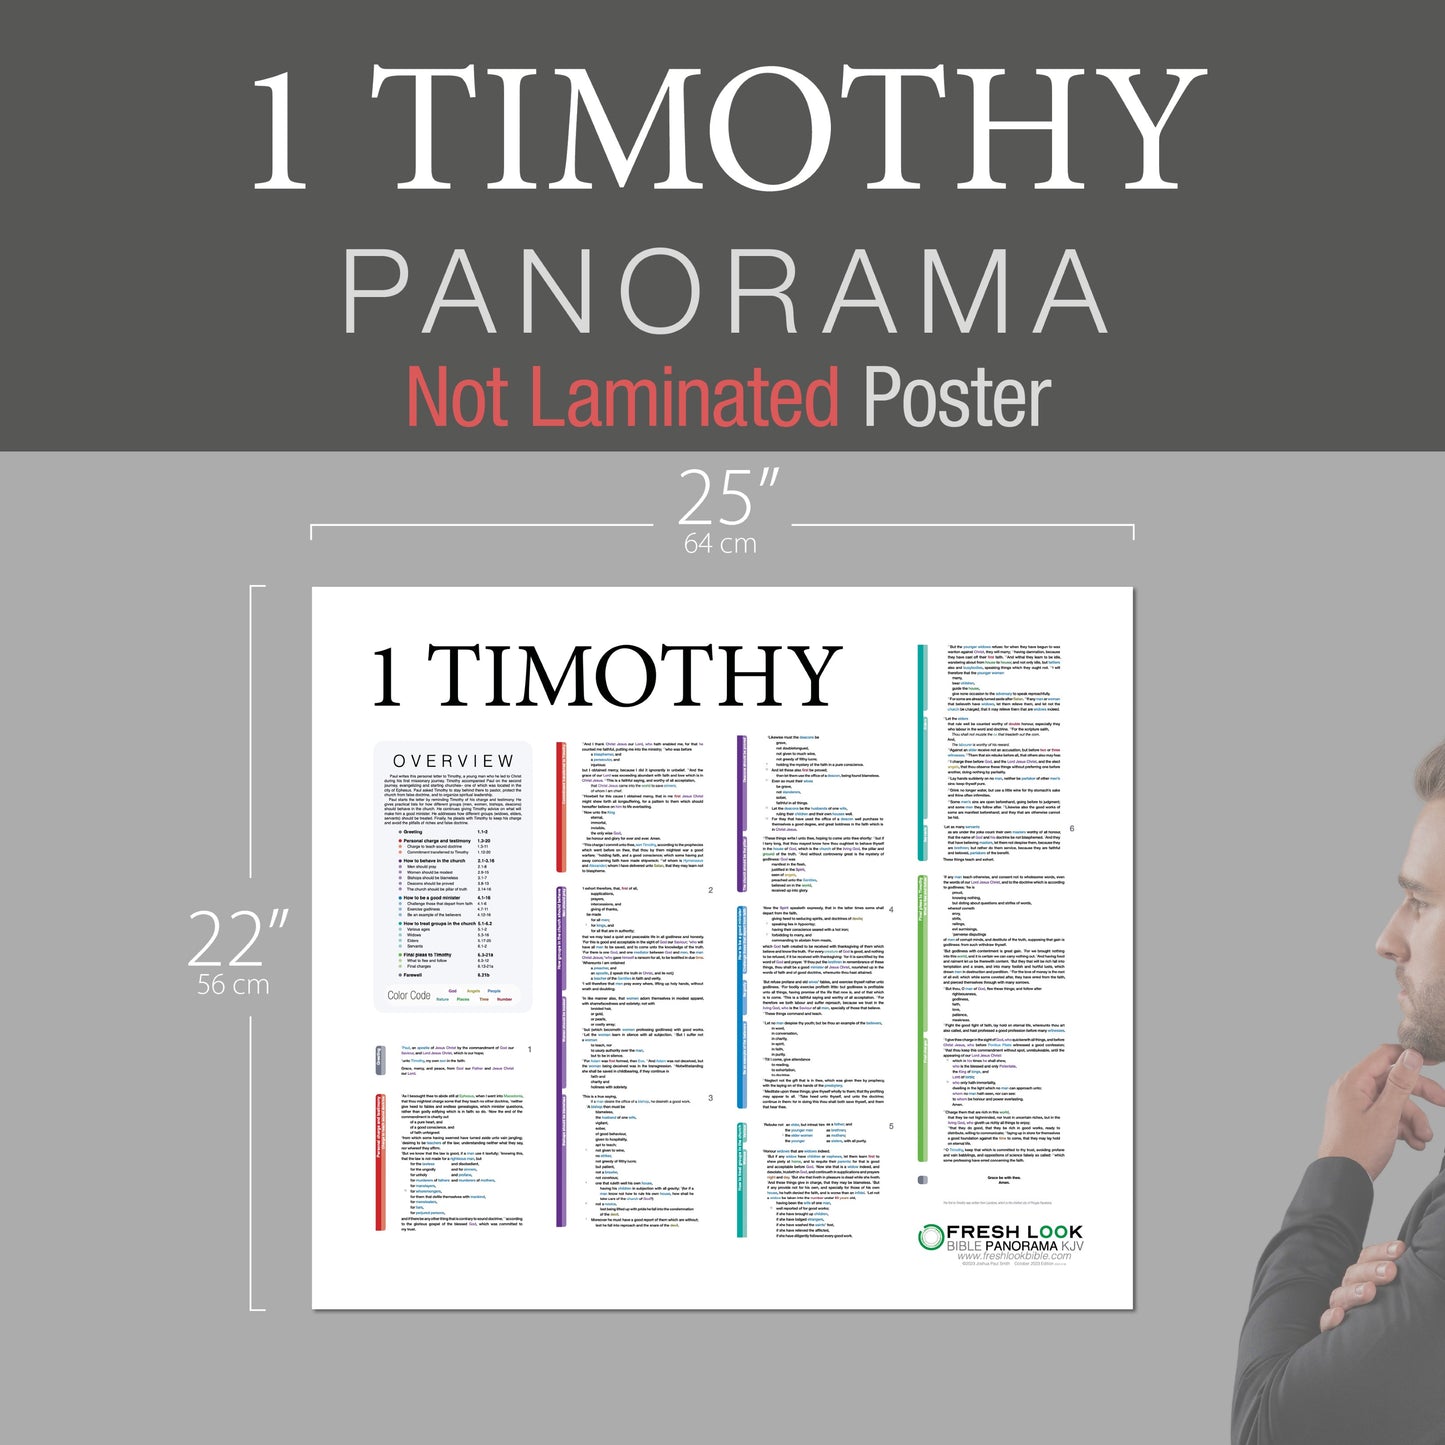 1 Timothy Panorama Not Laminated